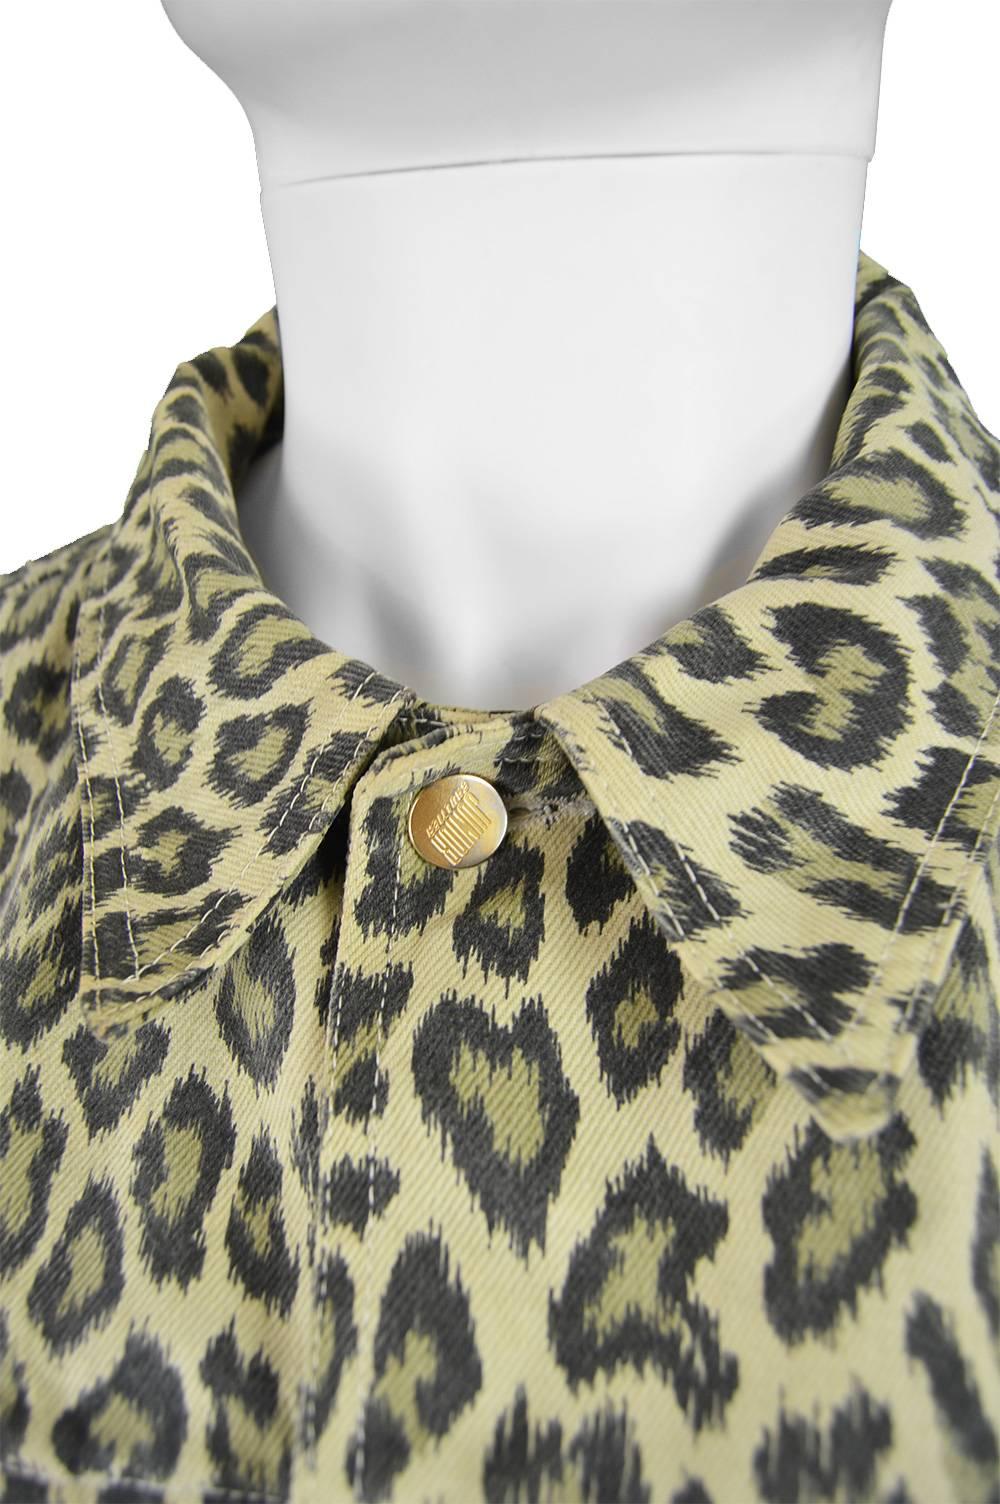 mens leopard print denim jacket